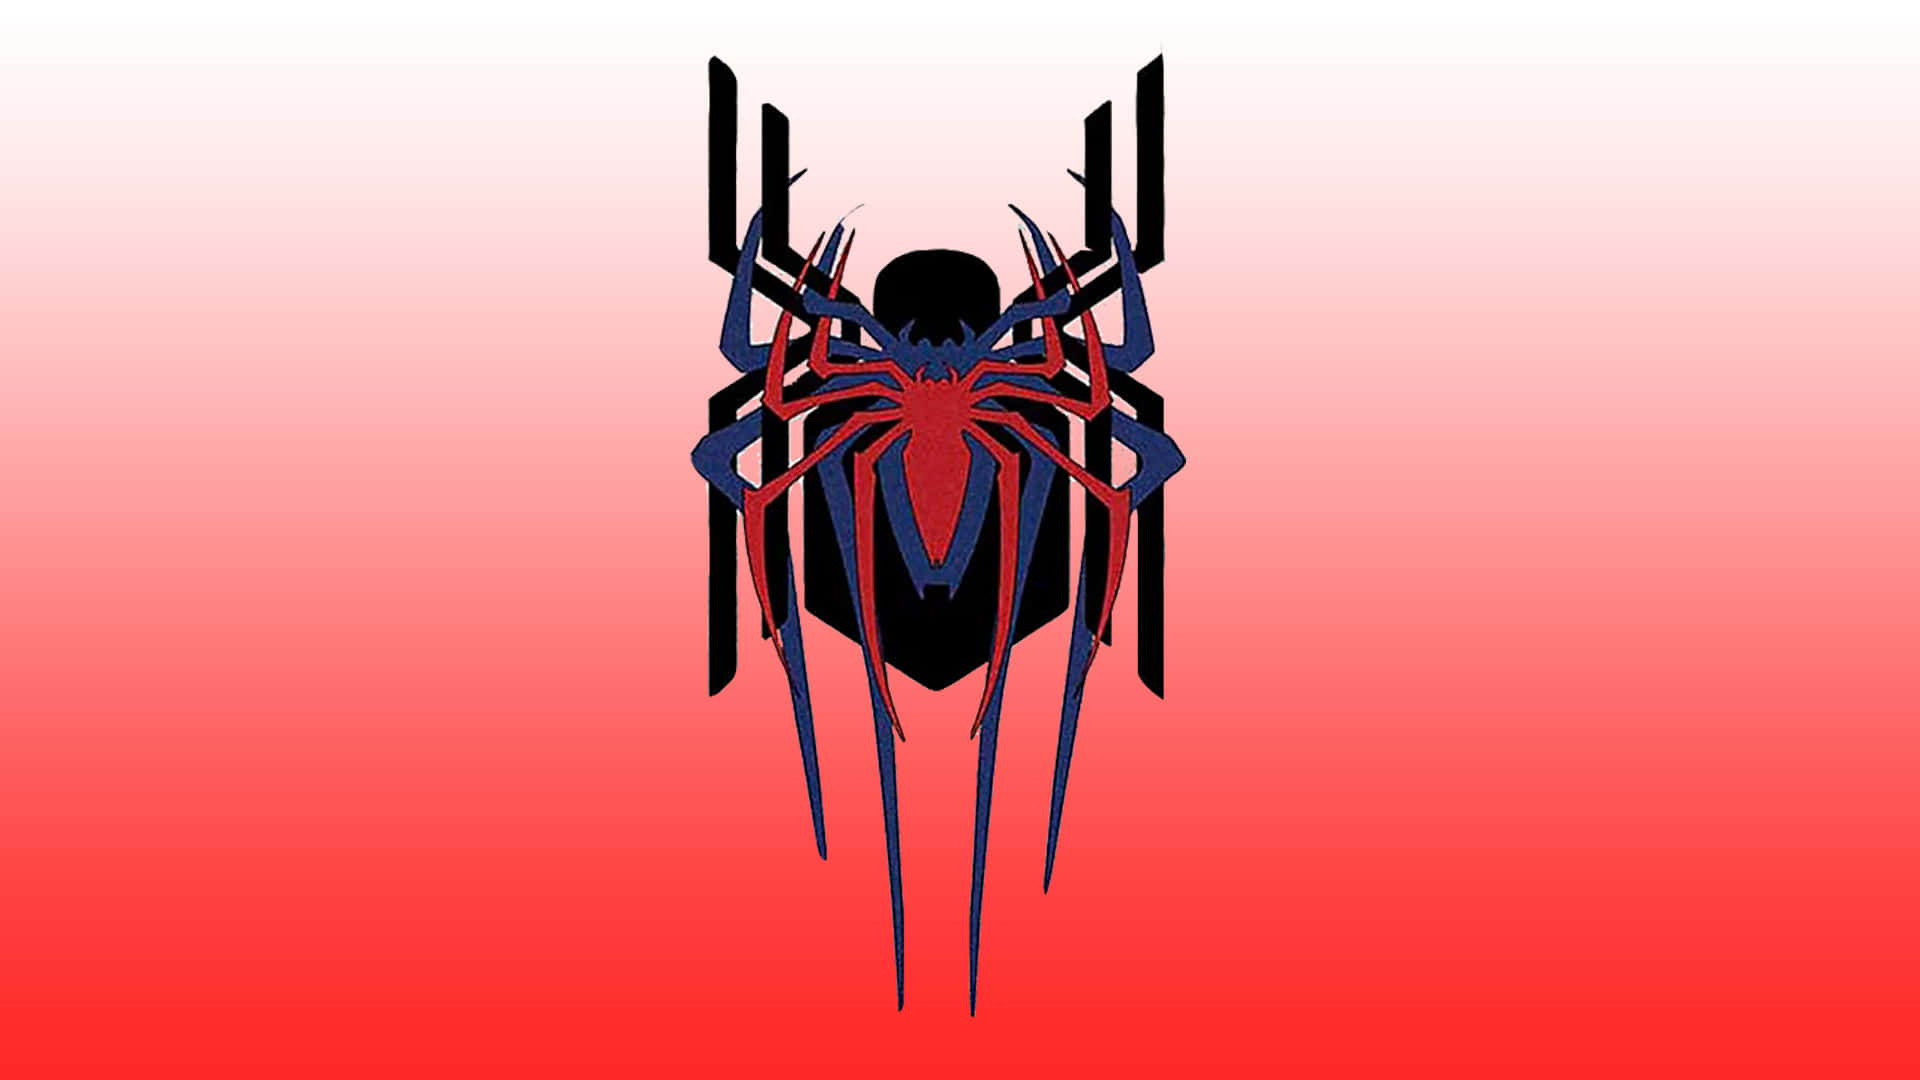 Ellogo De Spider-man En Un Fondo Rojo. Fondo de pantalla